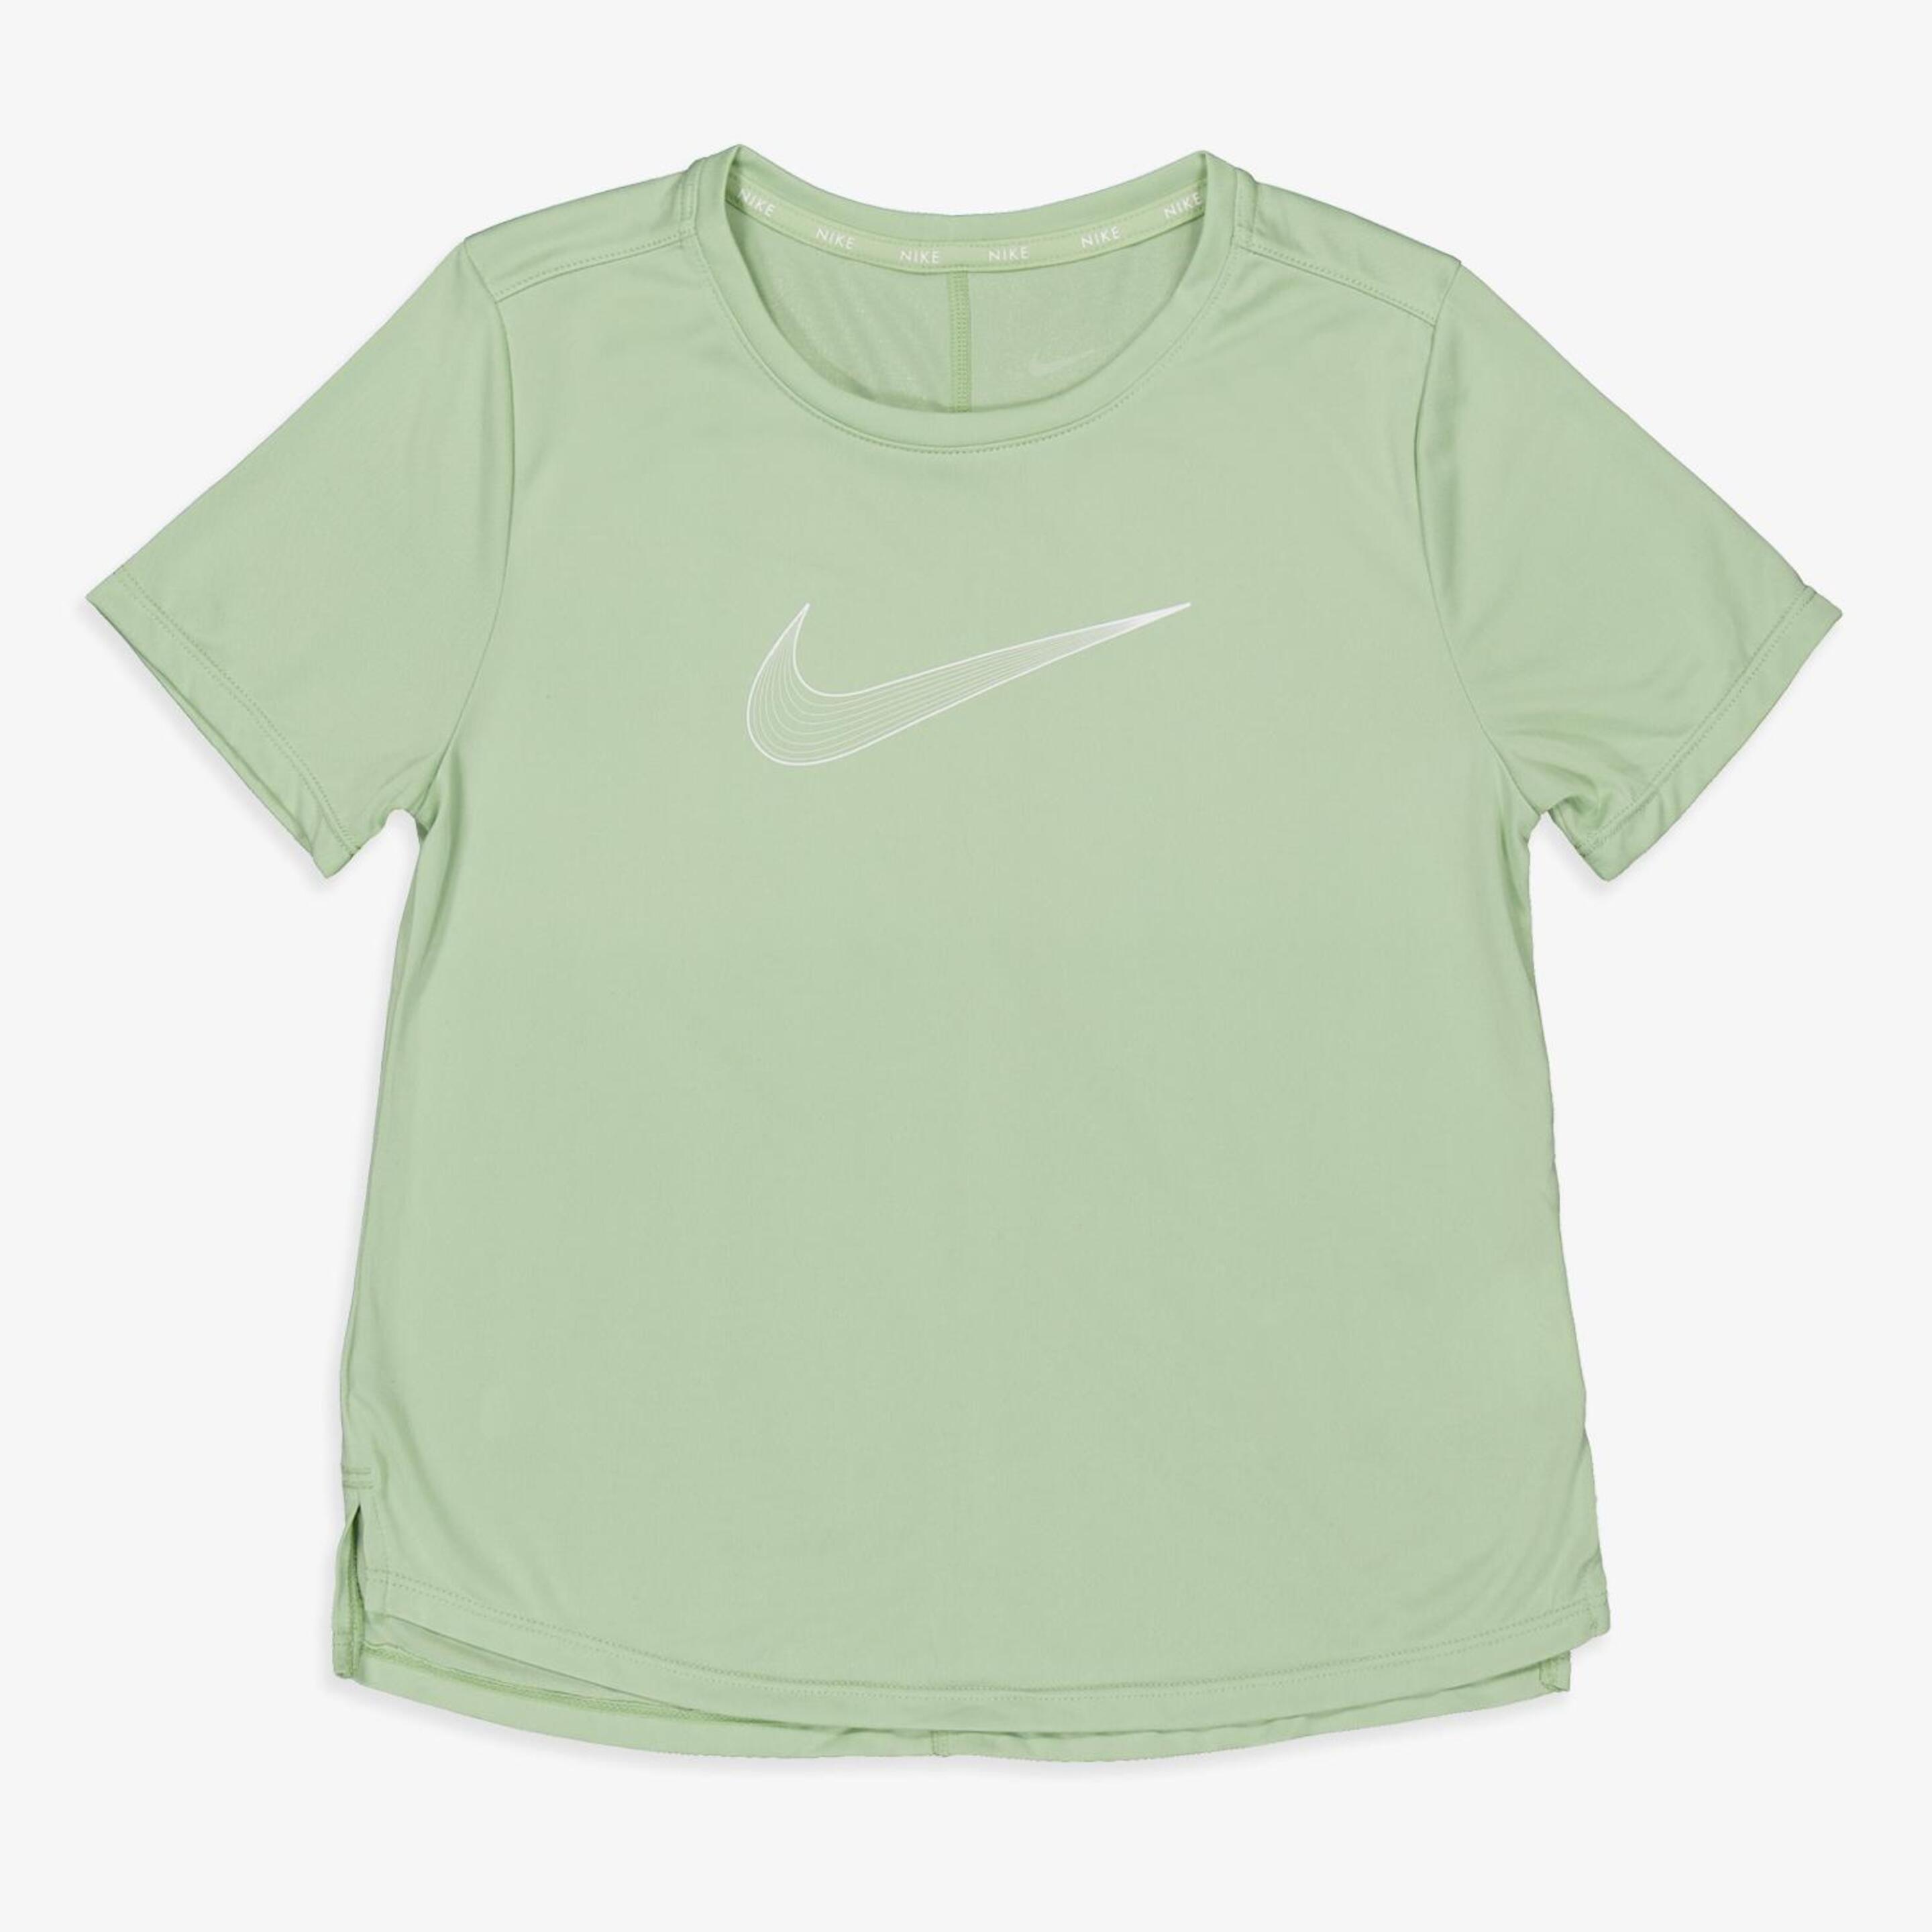 Nike One - verde - Camiseta Niña